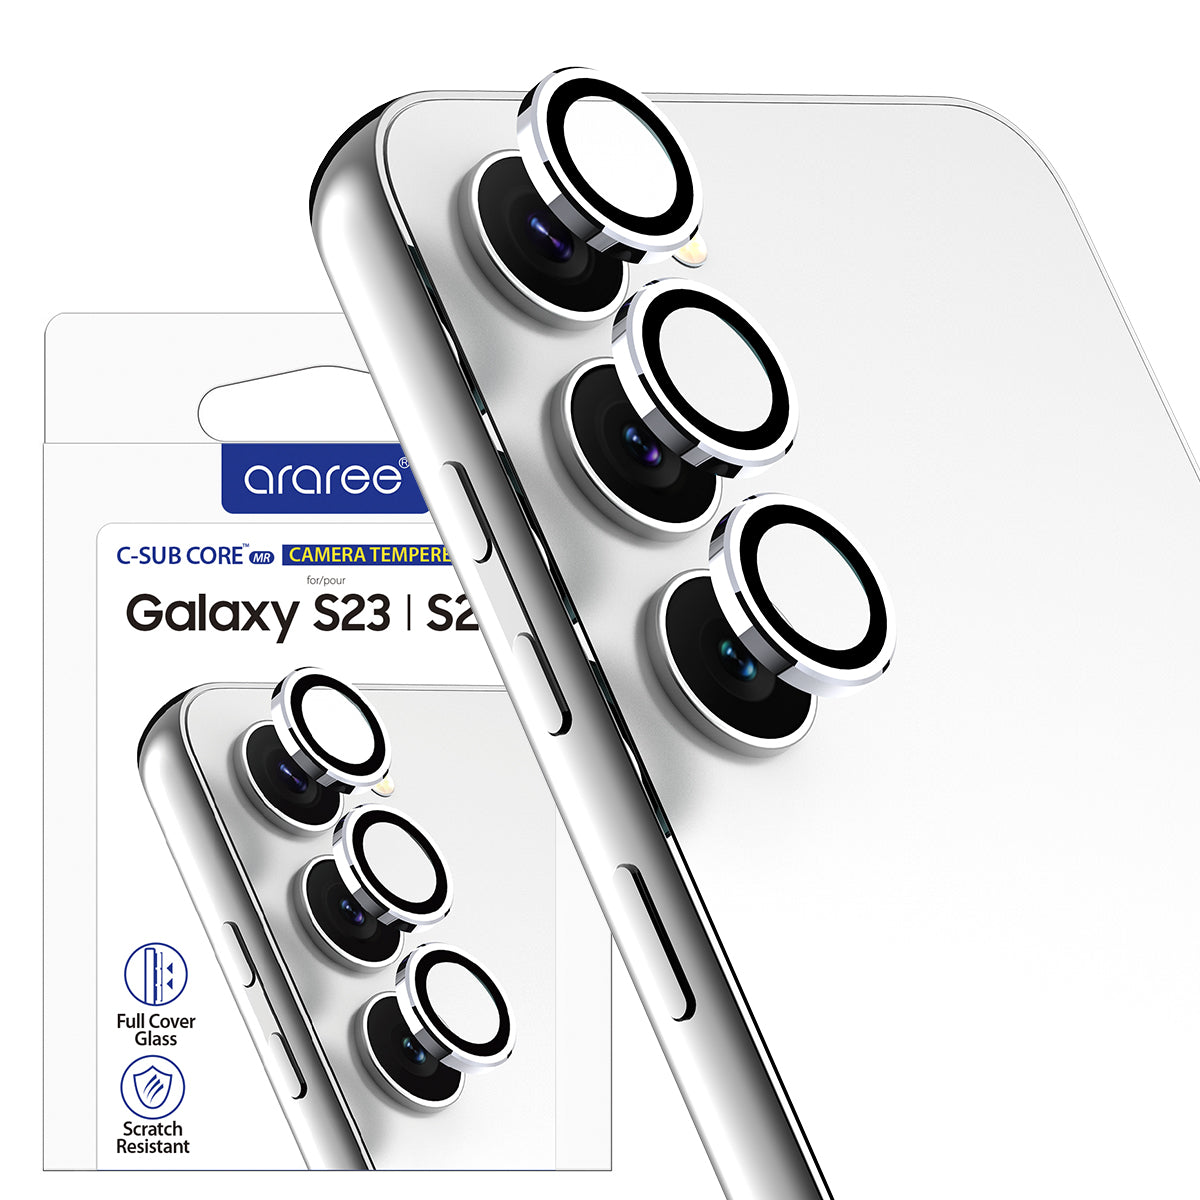 Galaxy S23/S23 Plus Camera Tempered Glass Protector by Araree - C-Sub Core MR